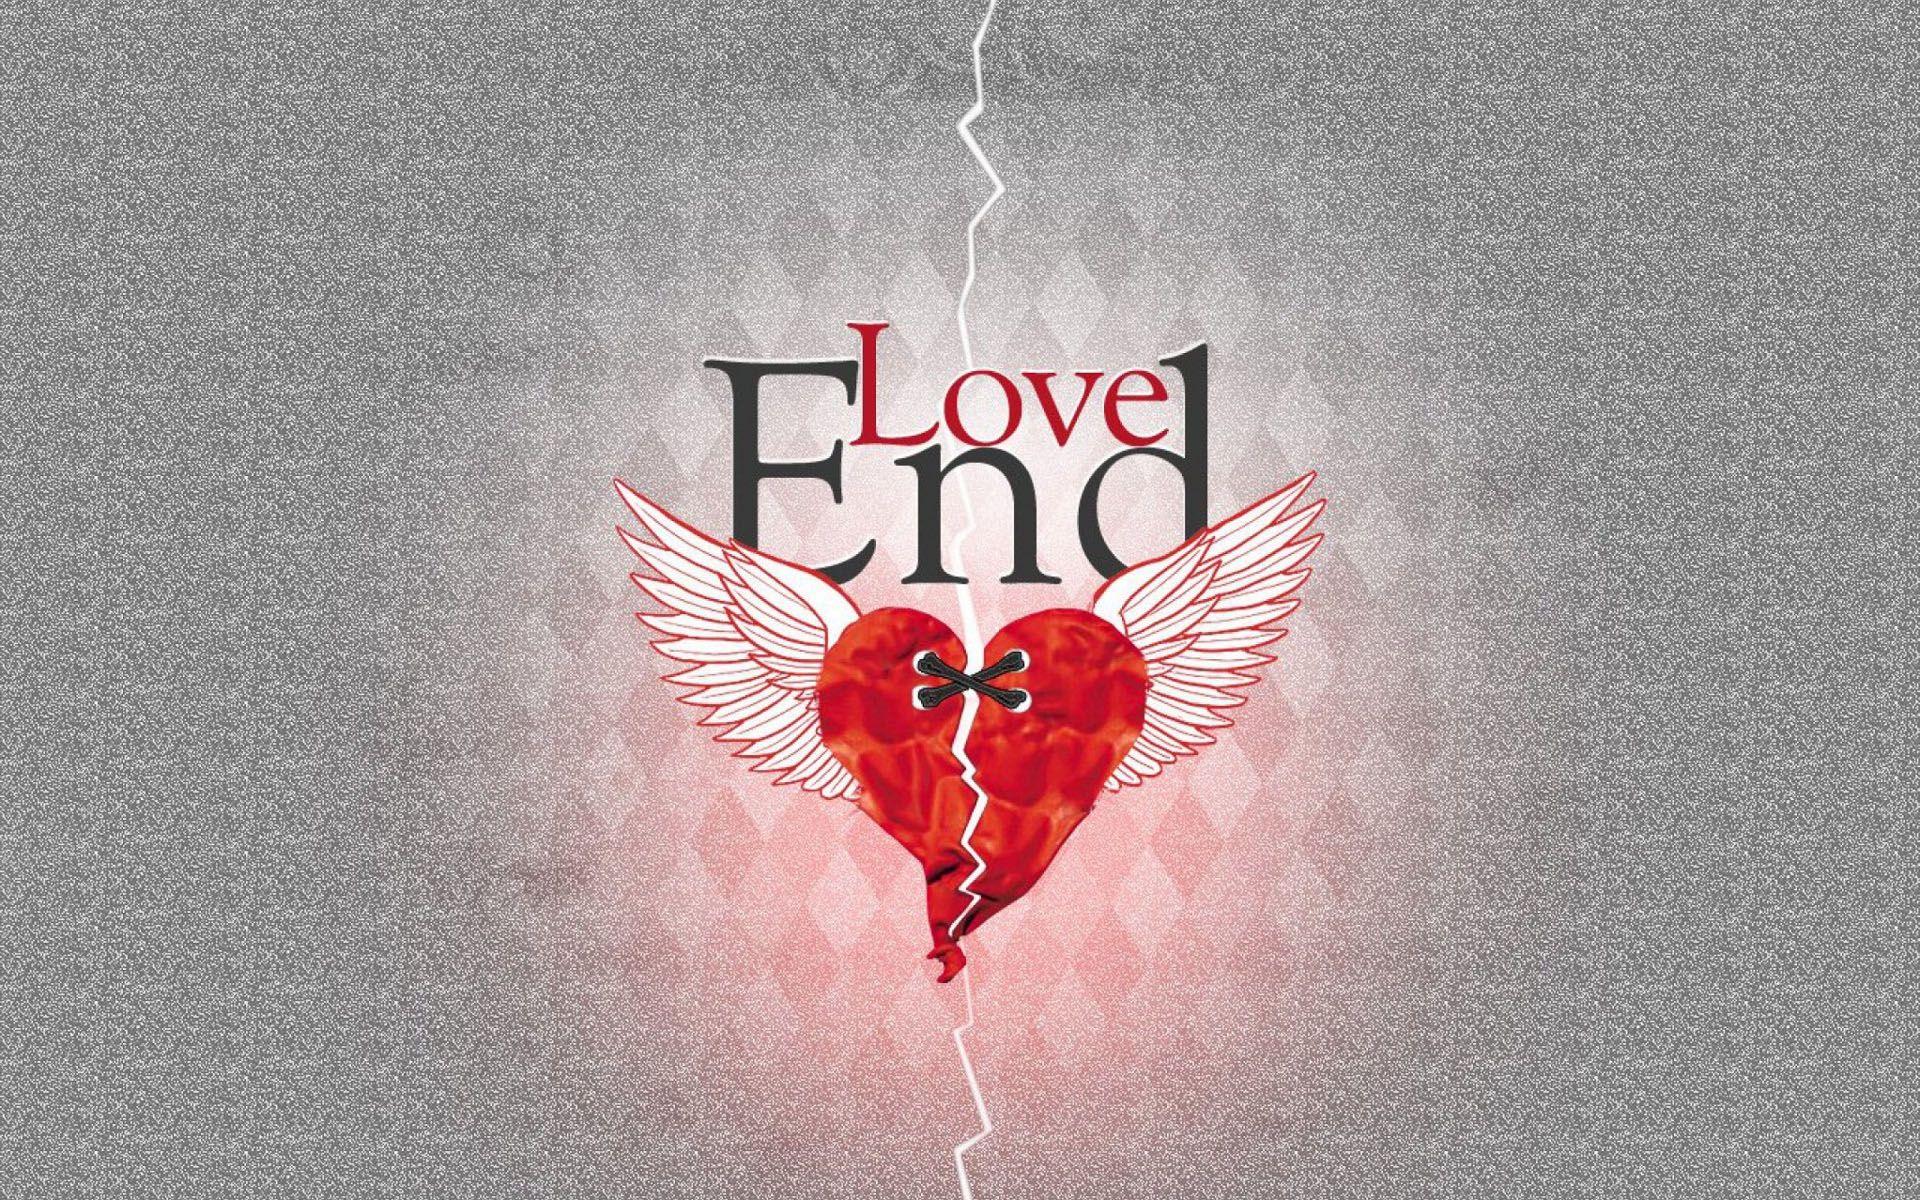 love breakup image download Download Break Up Image Free Download Latest HD Wallpaper for Love B. Love breakup, Broken heart wallpaper, Love wallpaper